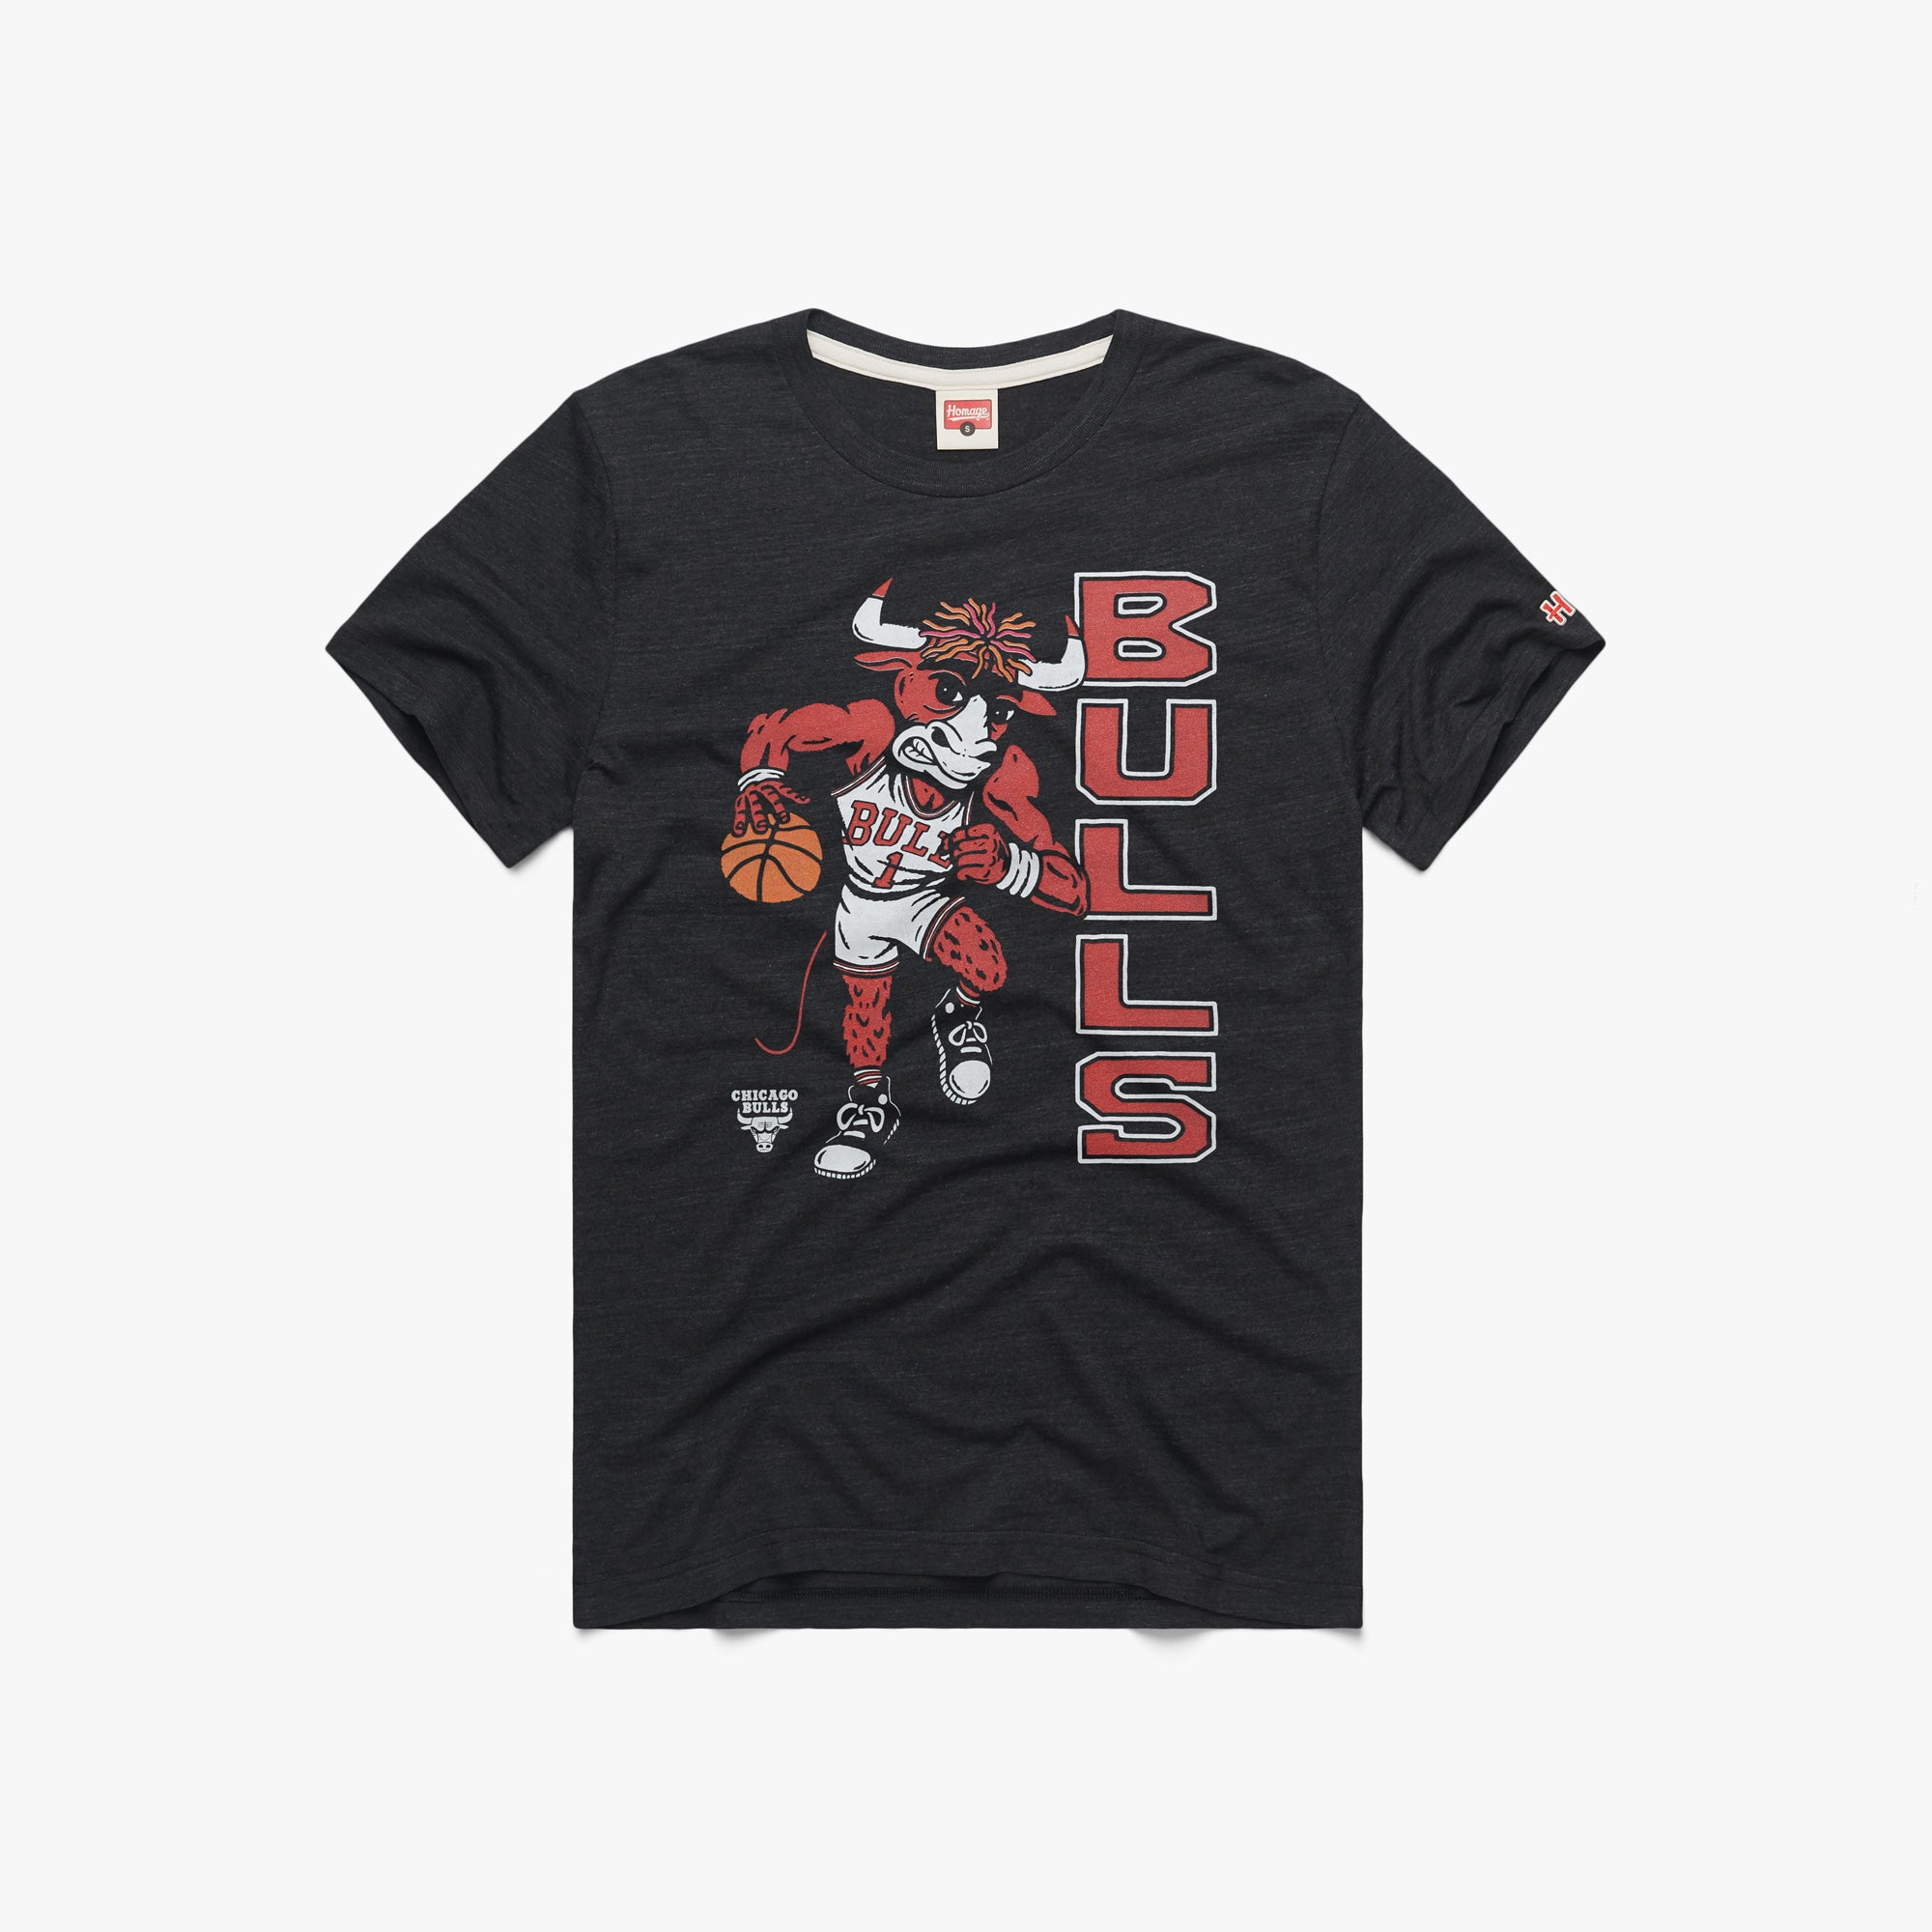 Chicago Bulls T-Shirt Design I Made For This Season - Anynee